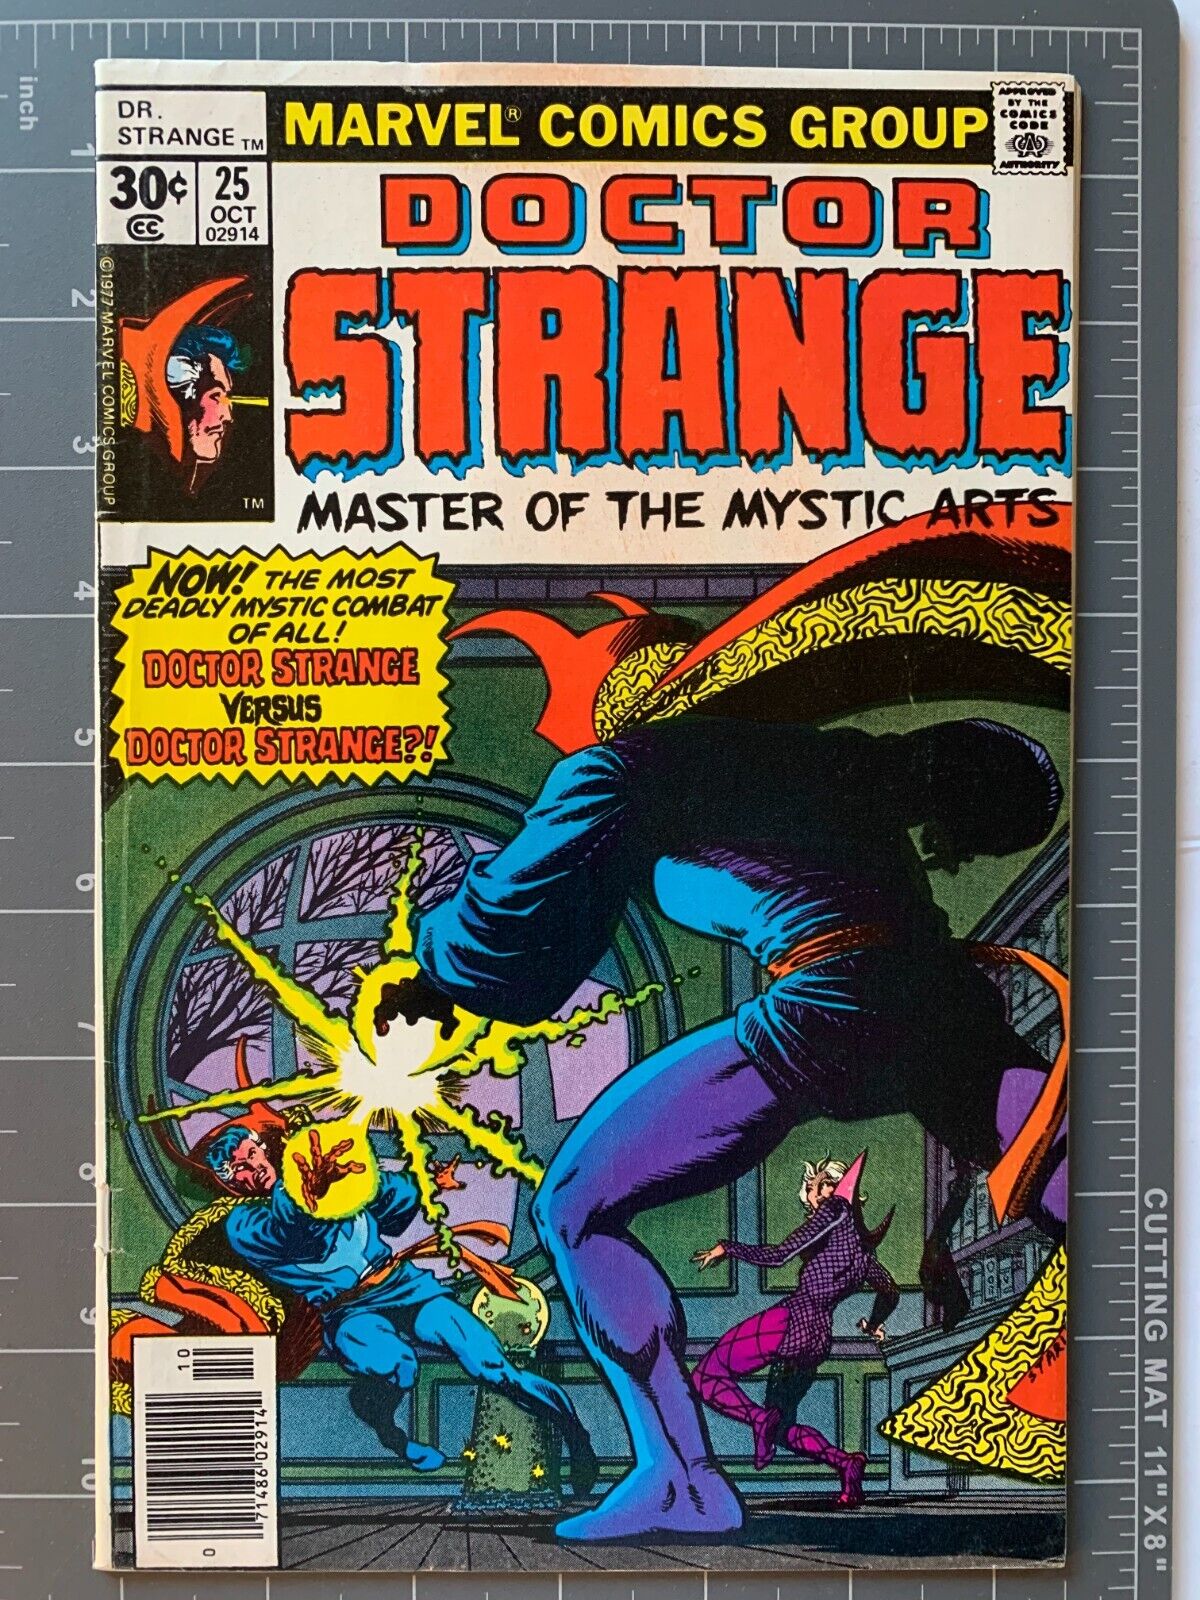 Doctor Strange #25 - Oct 1977 - Vol.2               (8082)